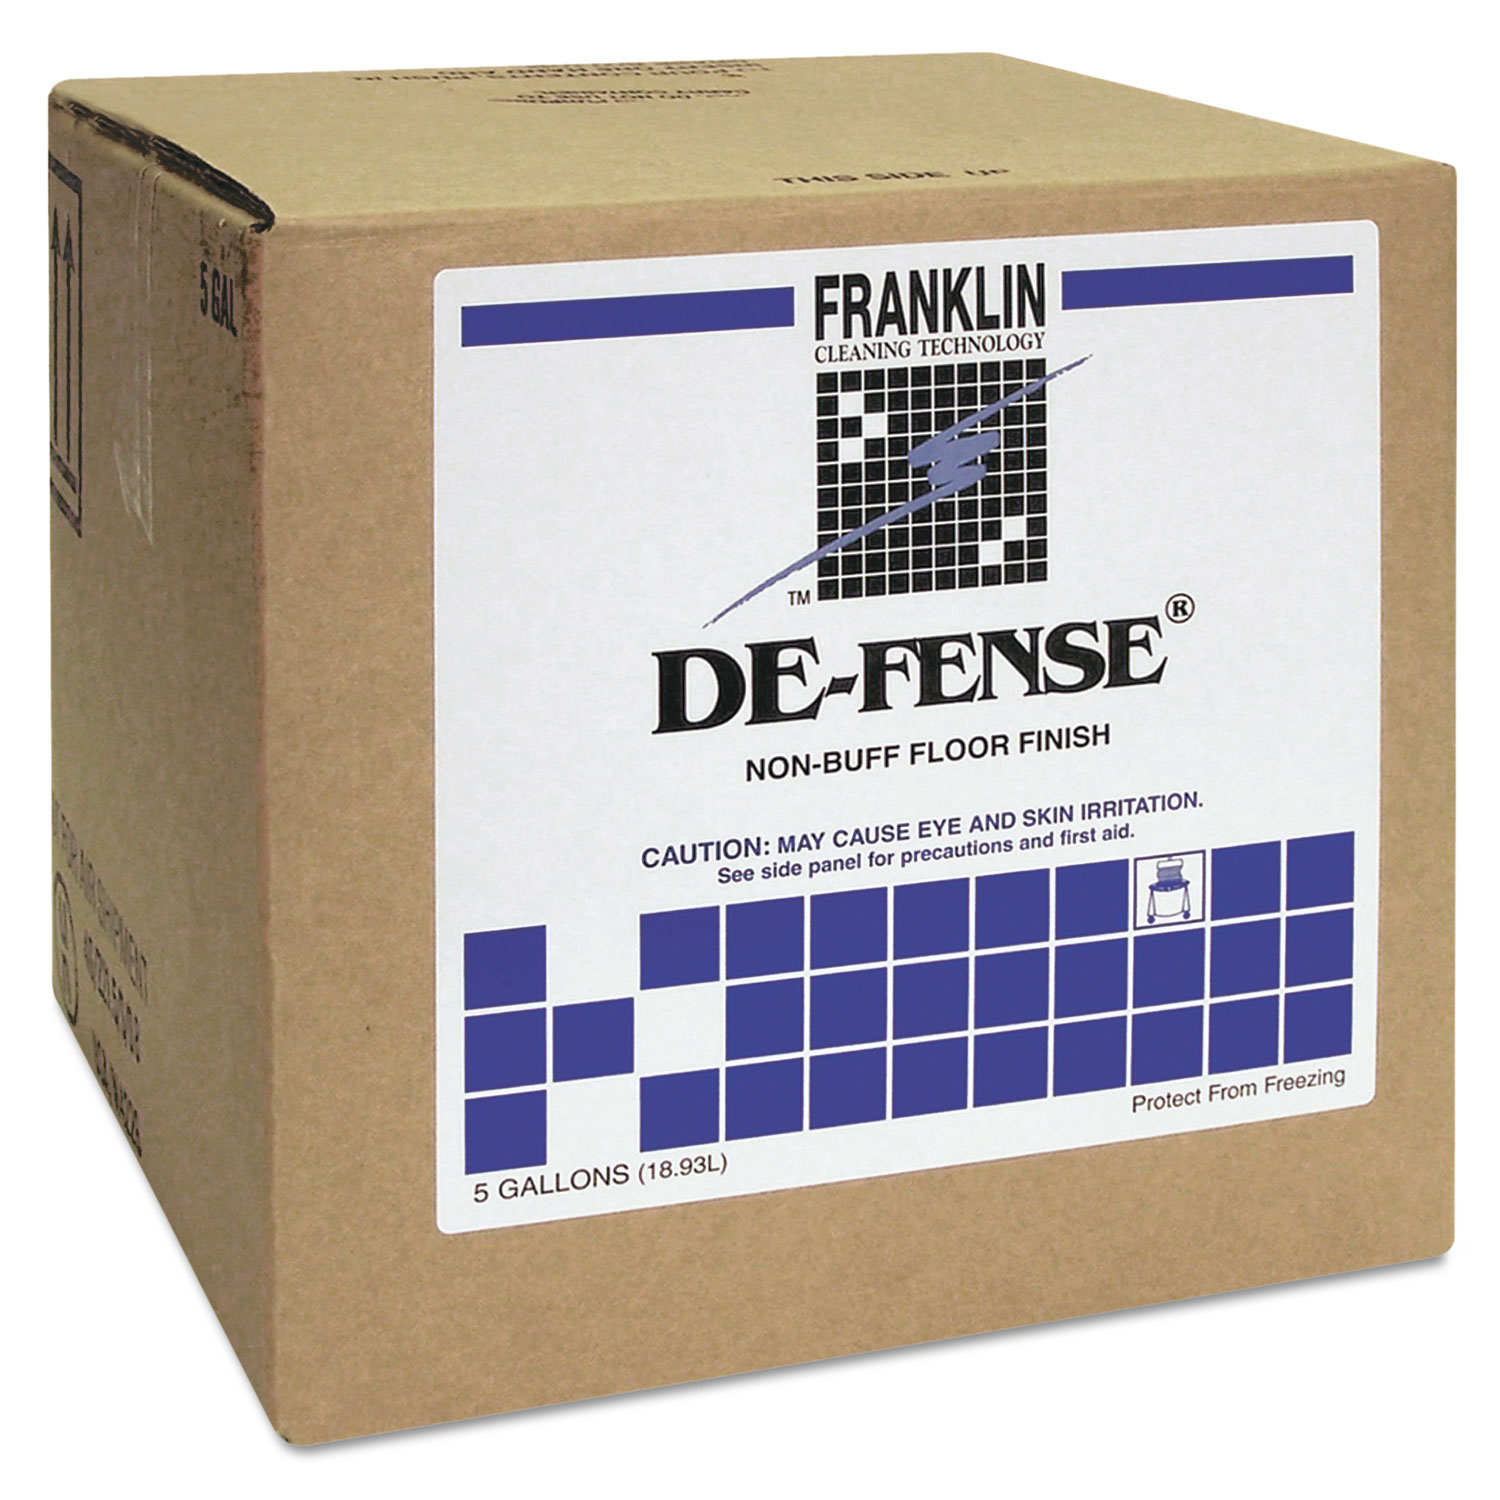  Franklin Cleaning Technology F135025 DE-FENSE Non-Buff Floor Finish, Liquid, 5 gal. Box (FKLF135025) 